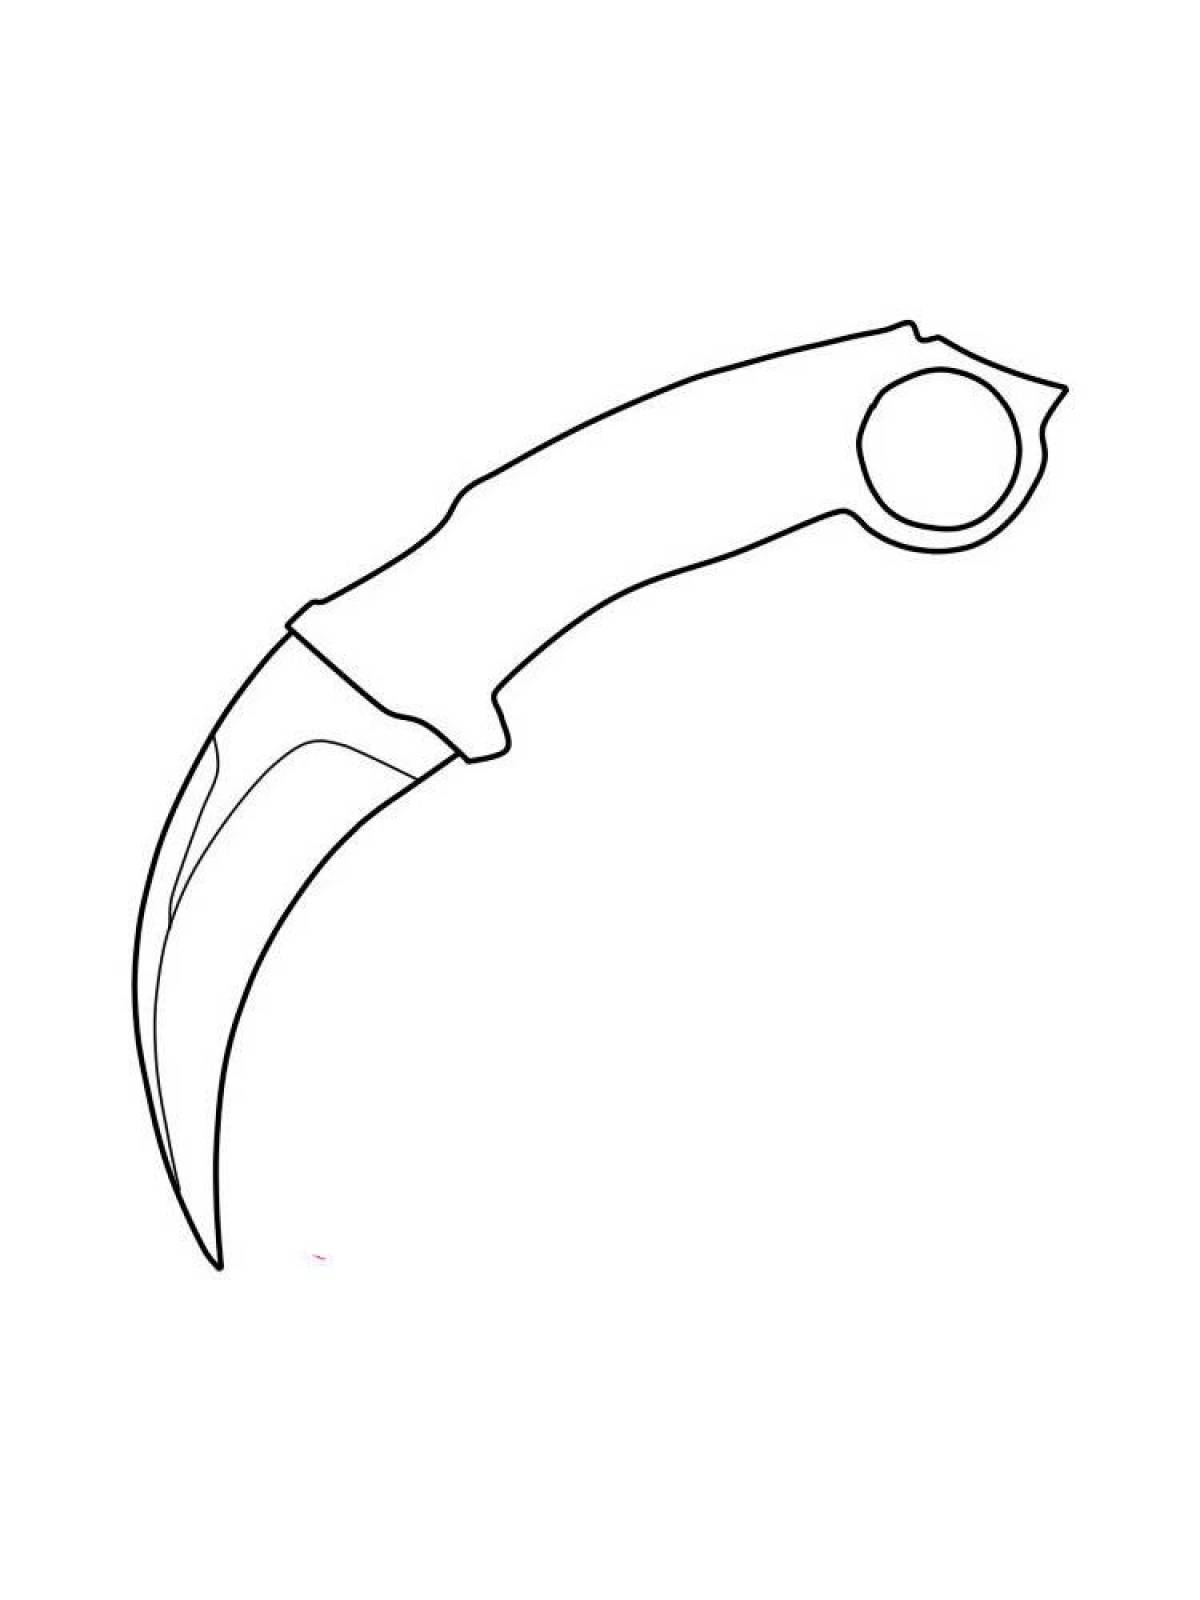 Легкие ножи standoff 2. Раскраски КС го ножи керамбит. Керамбит КС го чертеж. Нож керамбит из стандофф 2 раскраска. Ножи КС го чертежи керамбит.